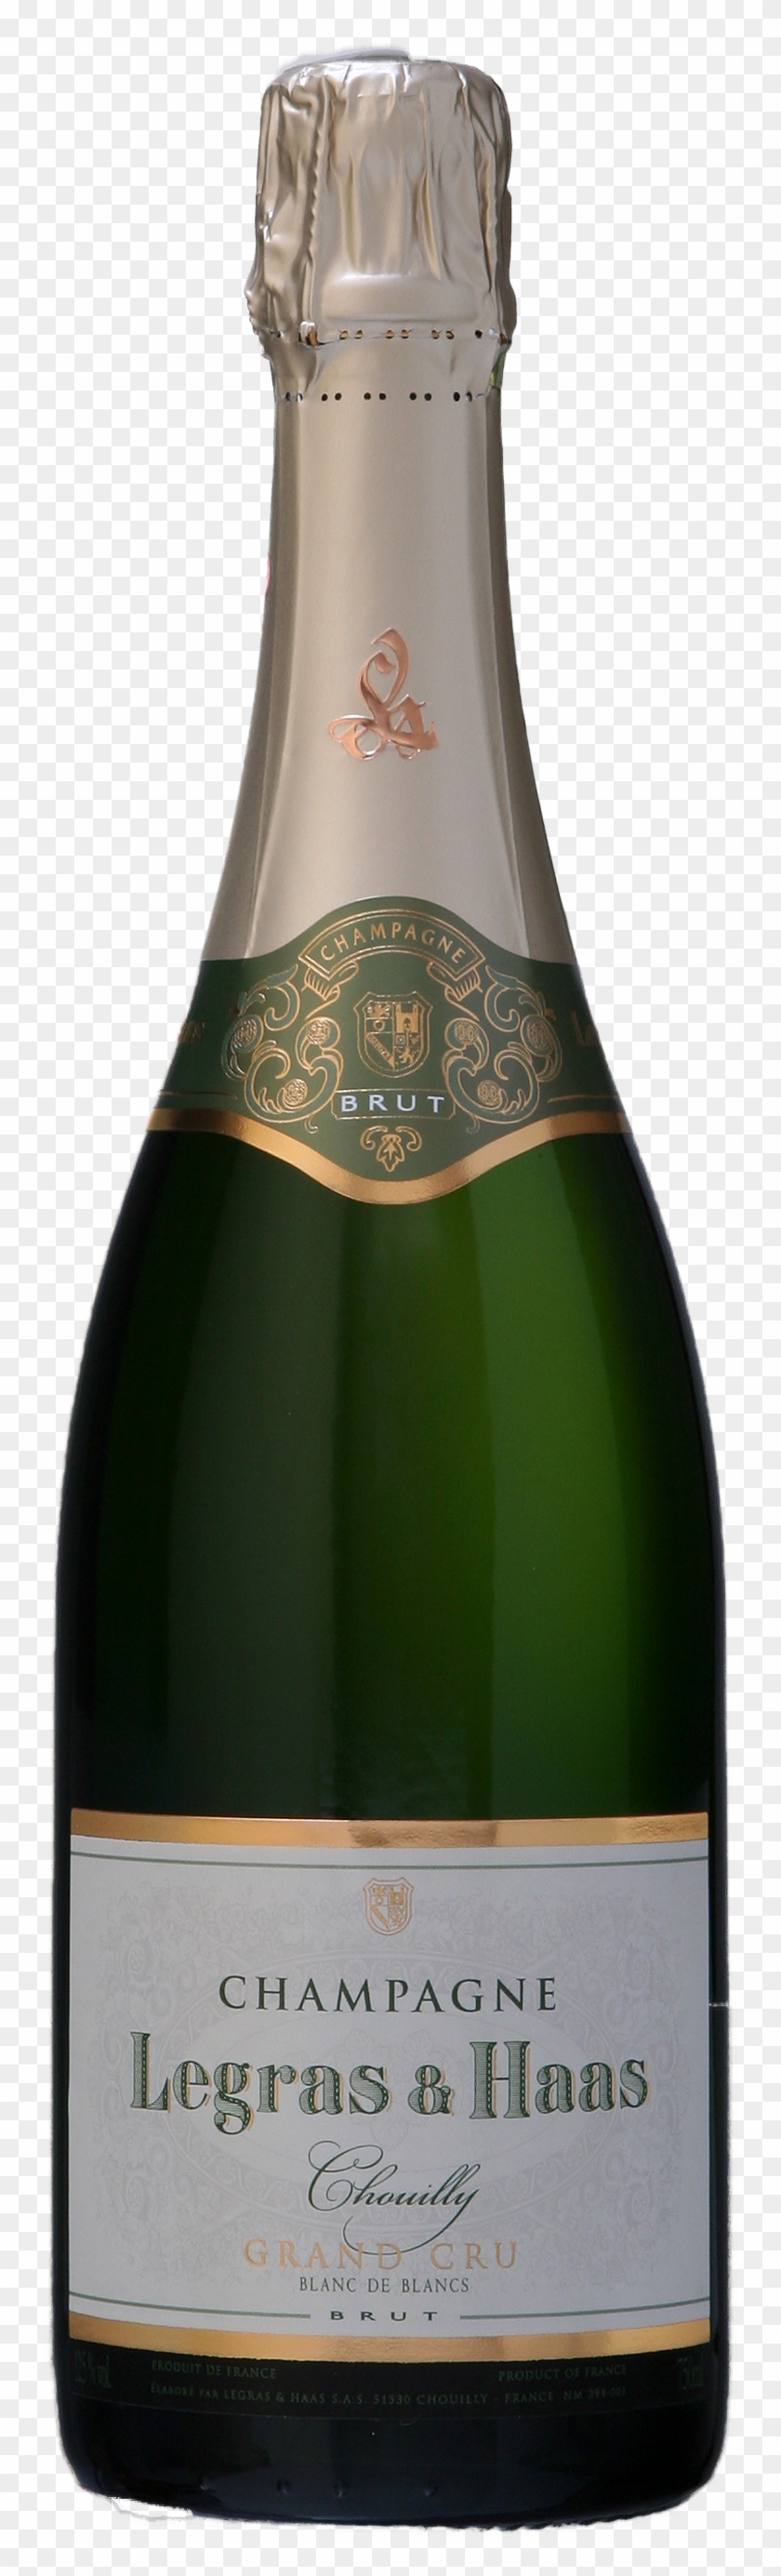 Legras & Haas Chouilly Grand Cru Brut Blanc De Blancs - Wine Bottle Clipart